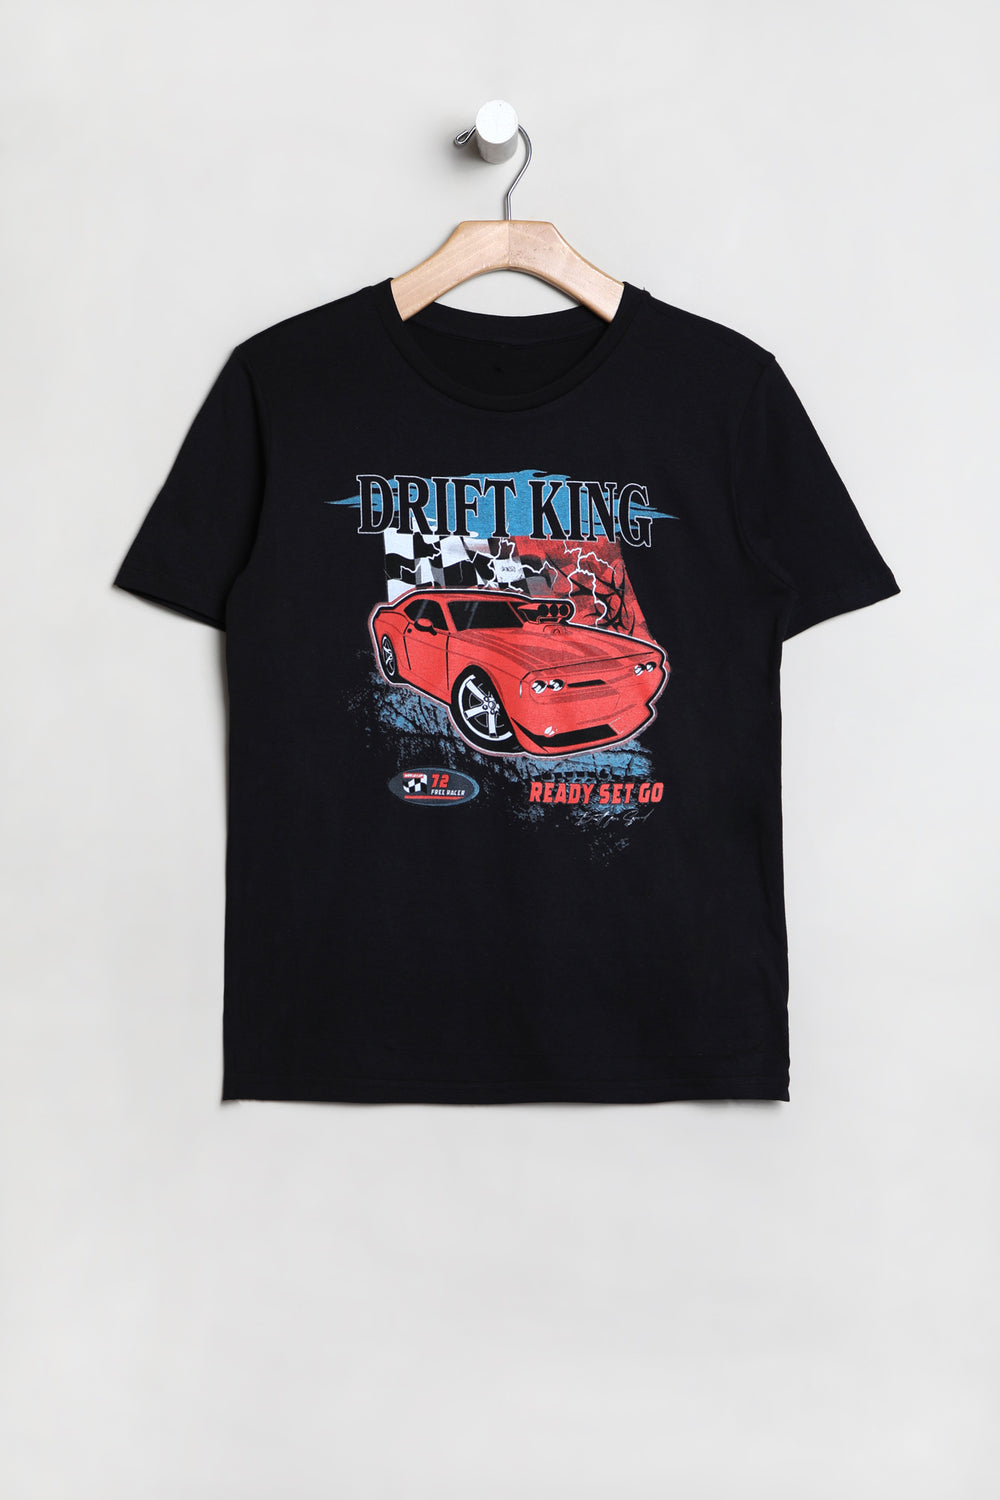 T-Shirt Imprimé Drift King West49 Junior T-Shirt Imprimé Drift King West49 Junior